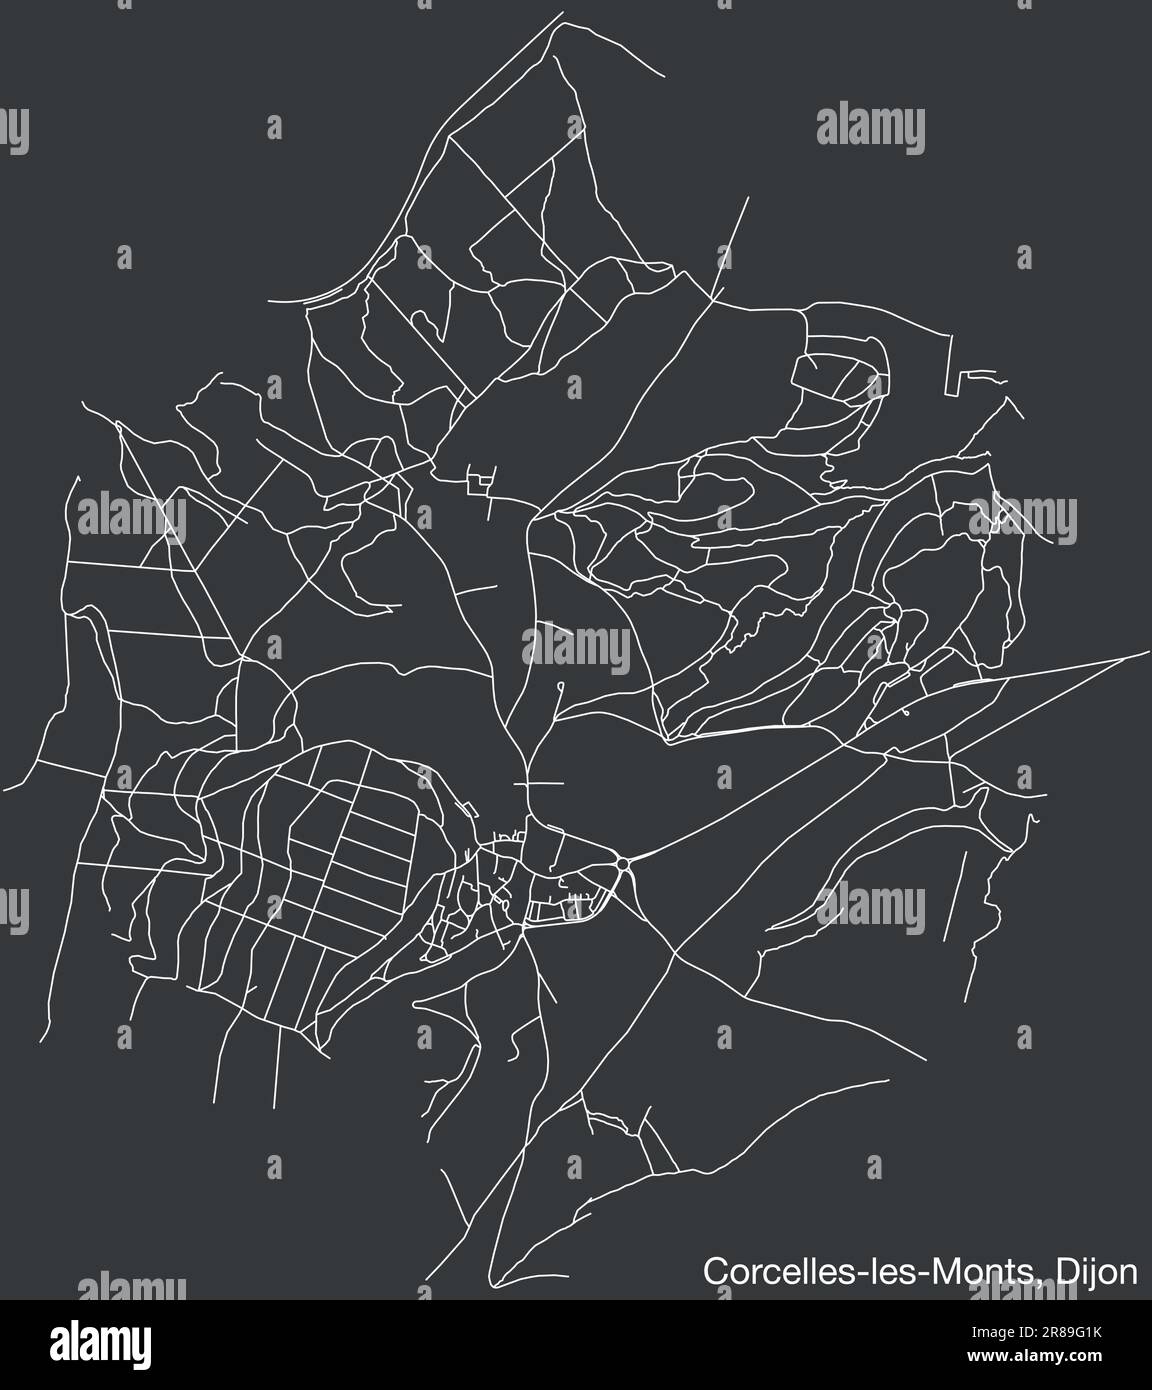 Street roads map of the CORCELLES-LES-MONTS QUARTER, DIJON Stock Vector